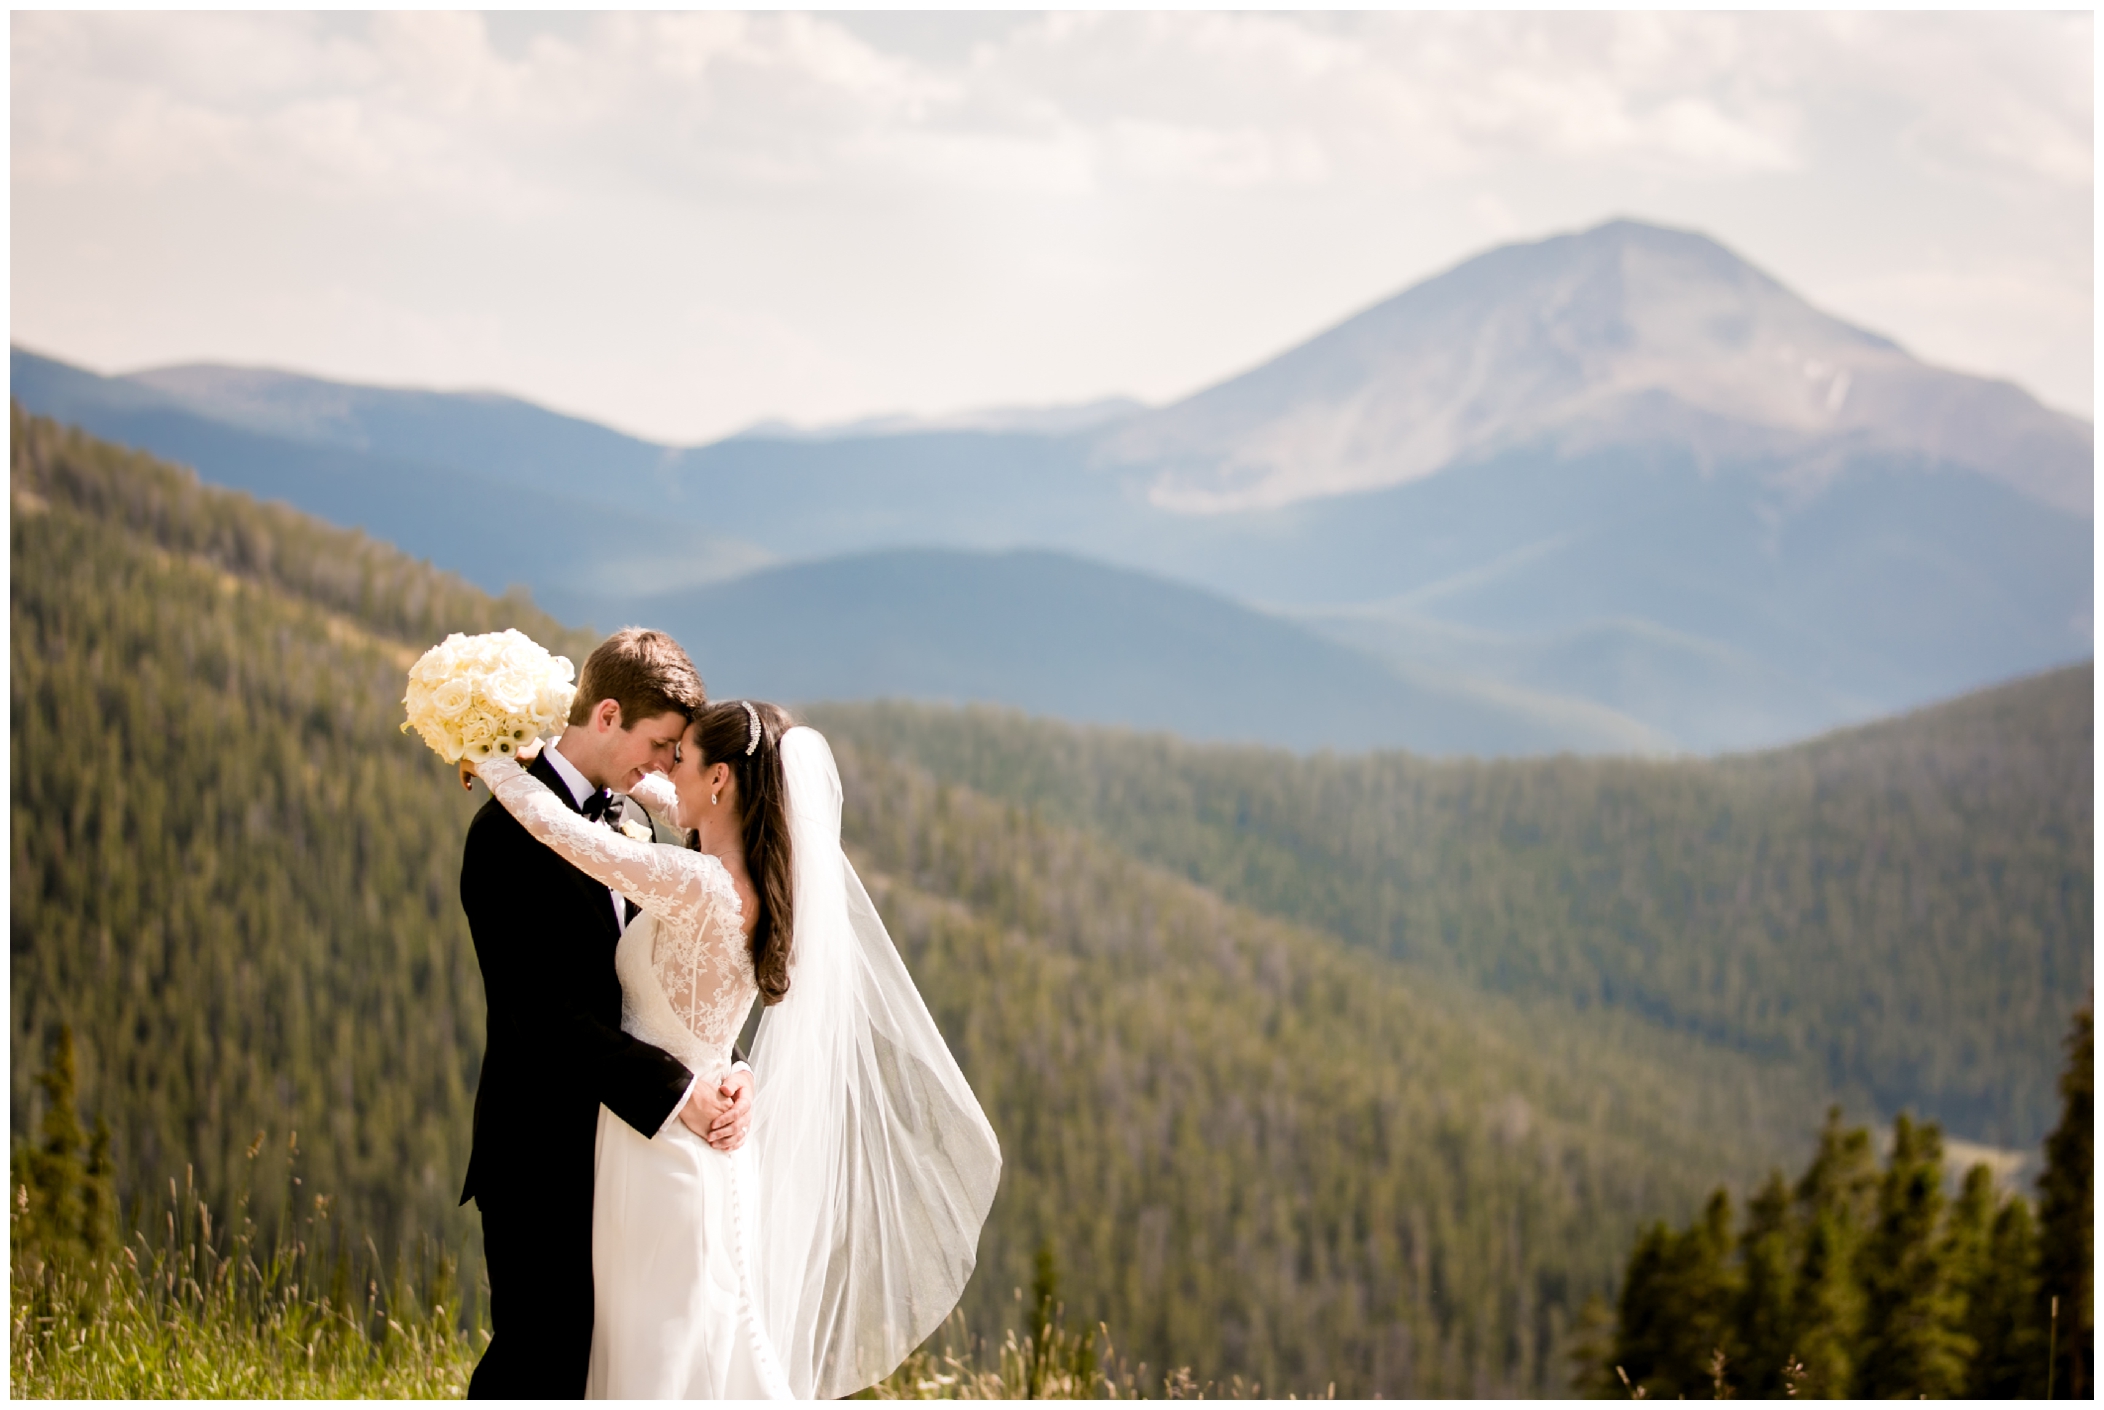 Timber Ridge Keystone wedding photos by award winning Colorado elopement photographer Plum Pretty Photography